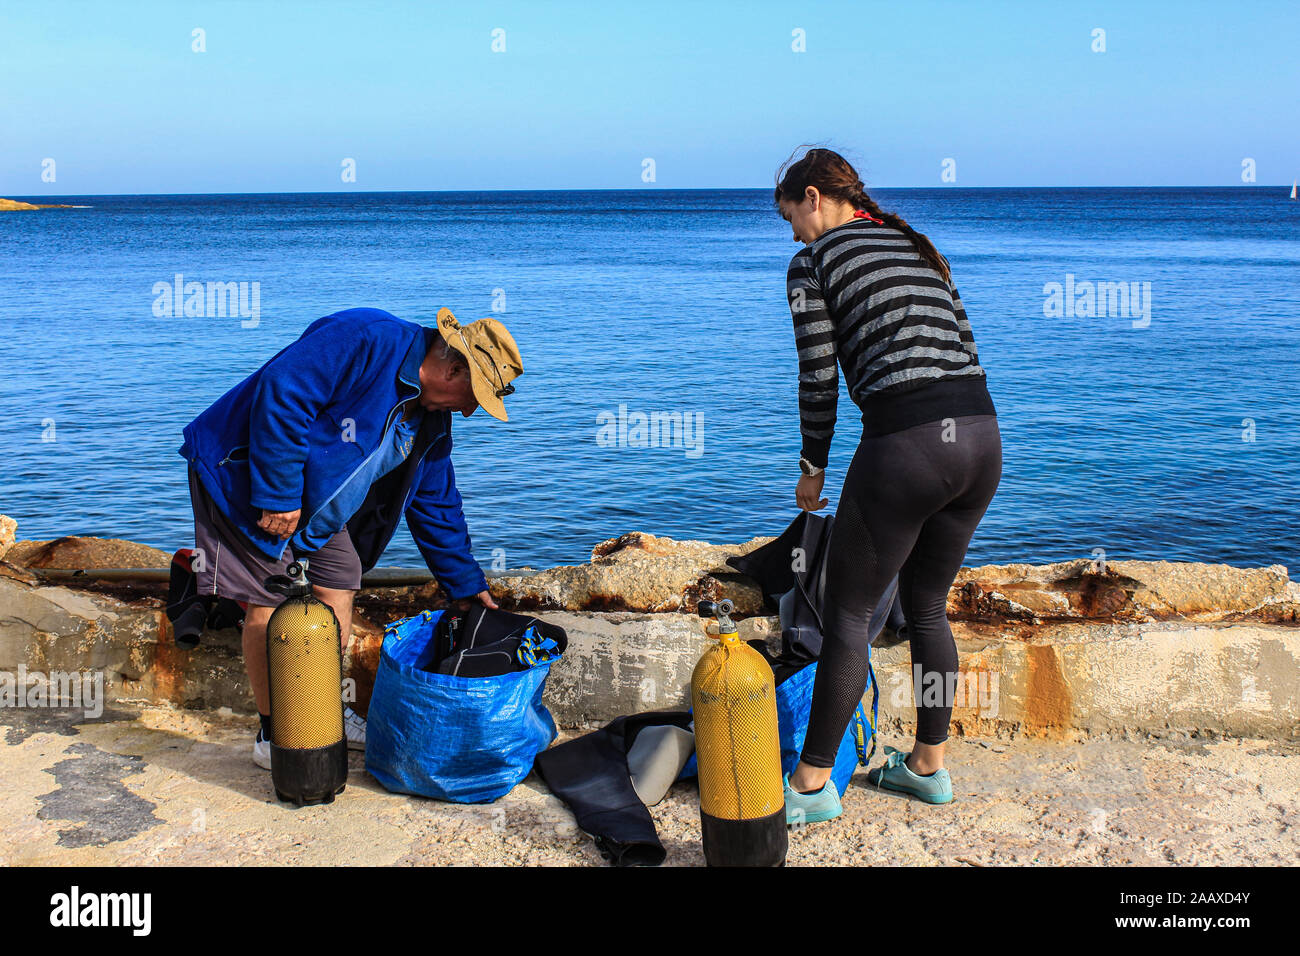 Vorbereiten der Dive Kit in St. Elmo's Bay, Malta. Stockfoto